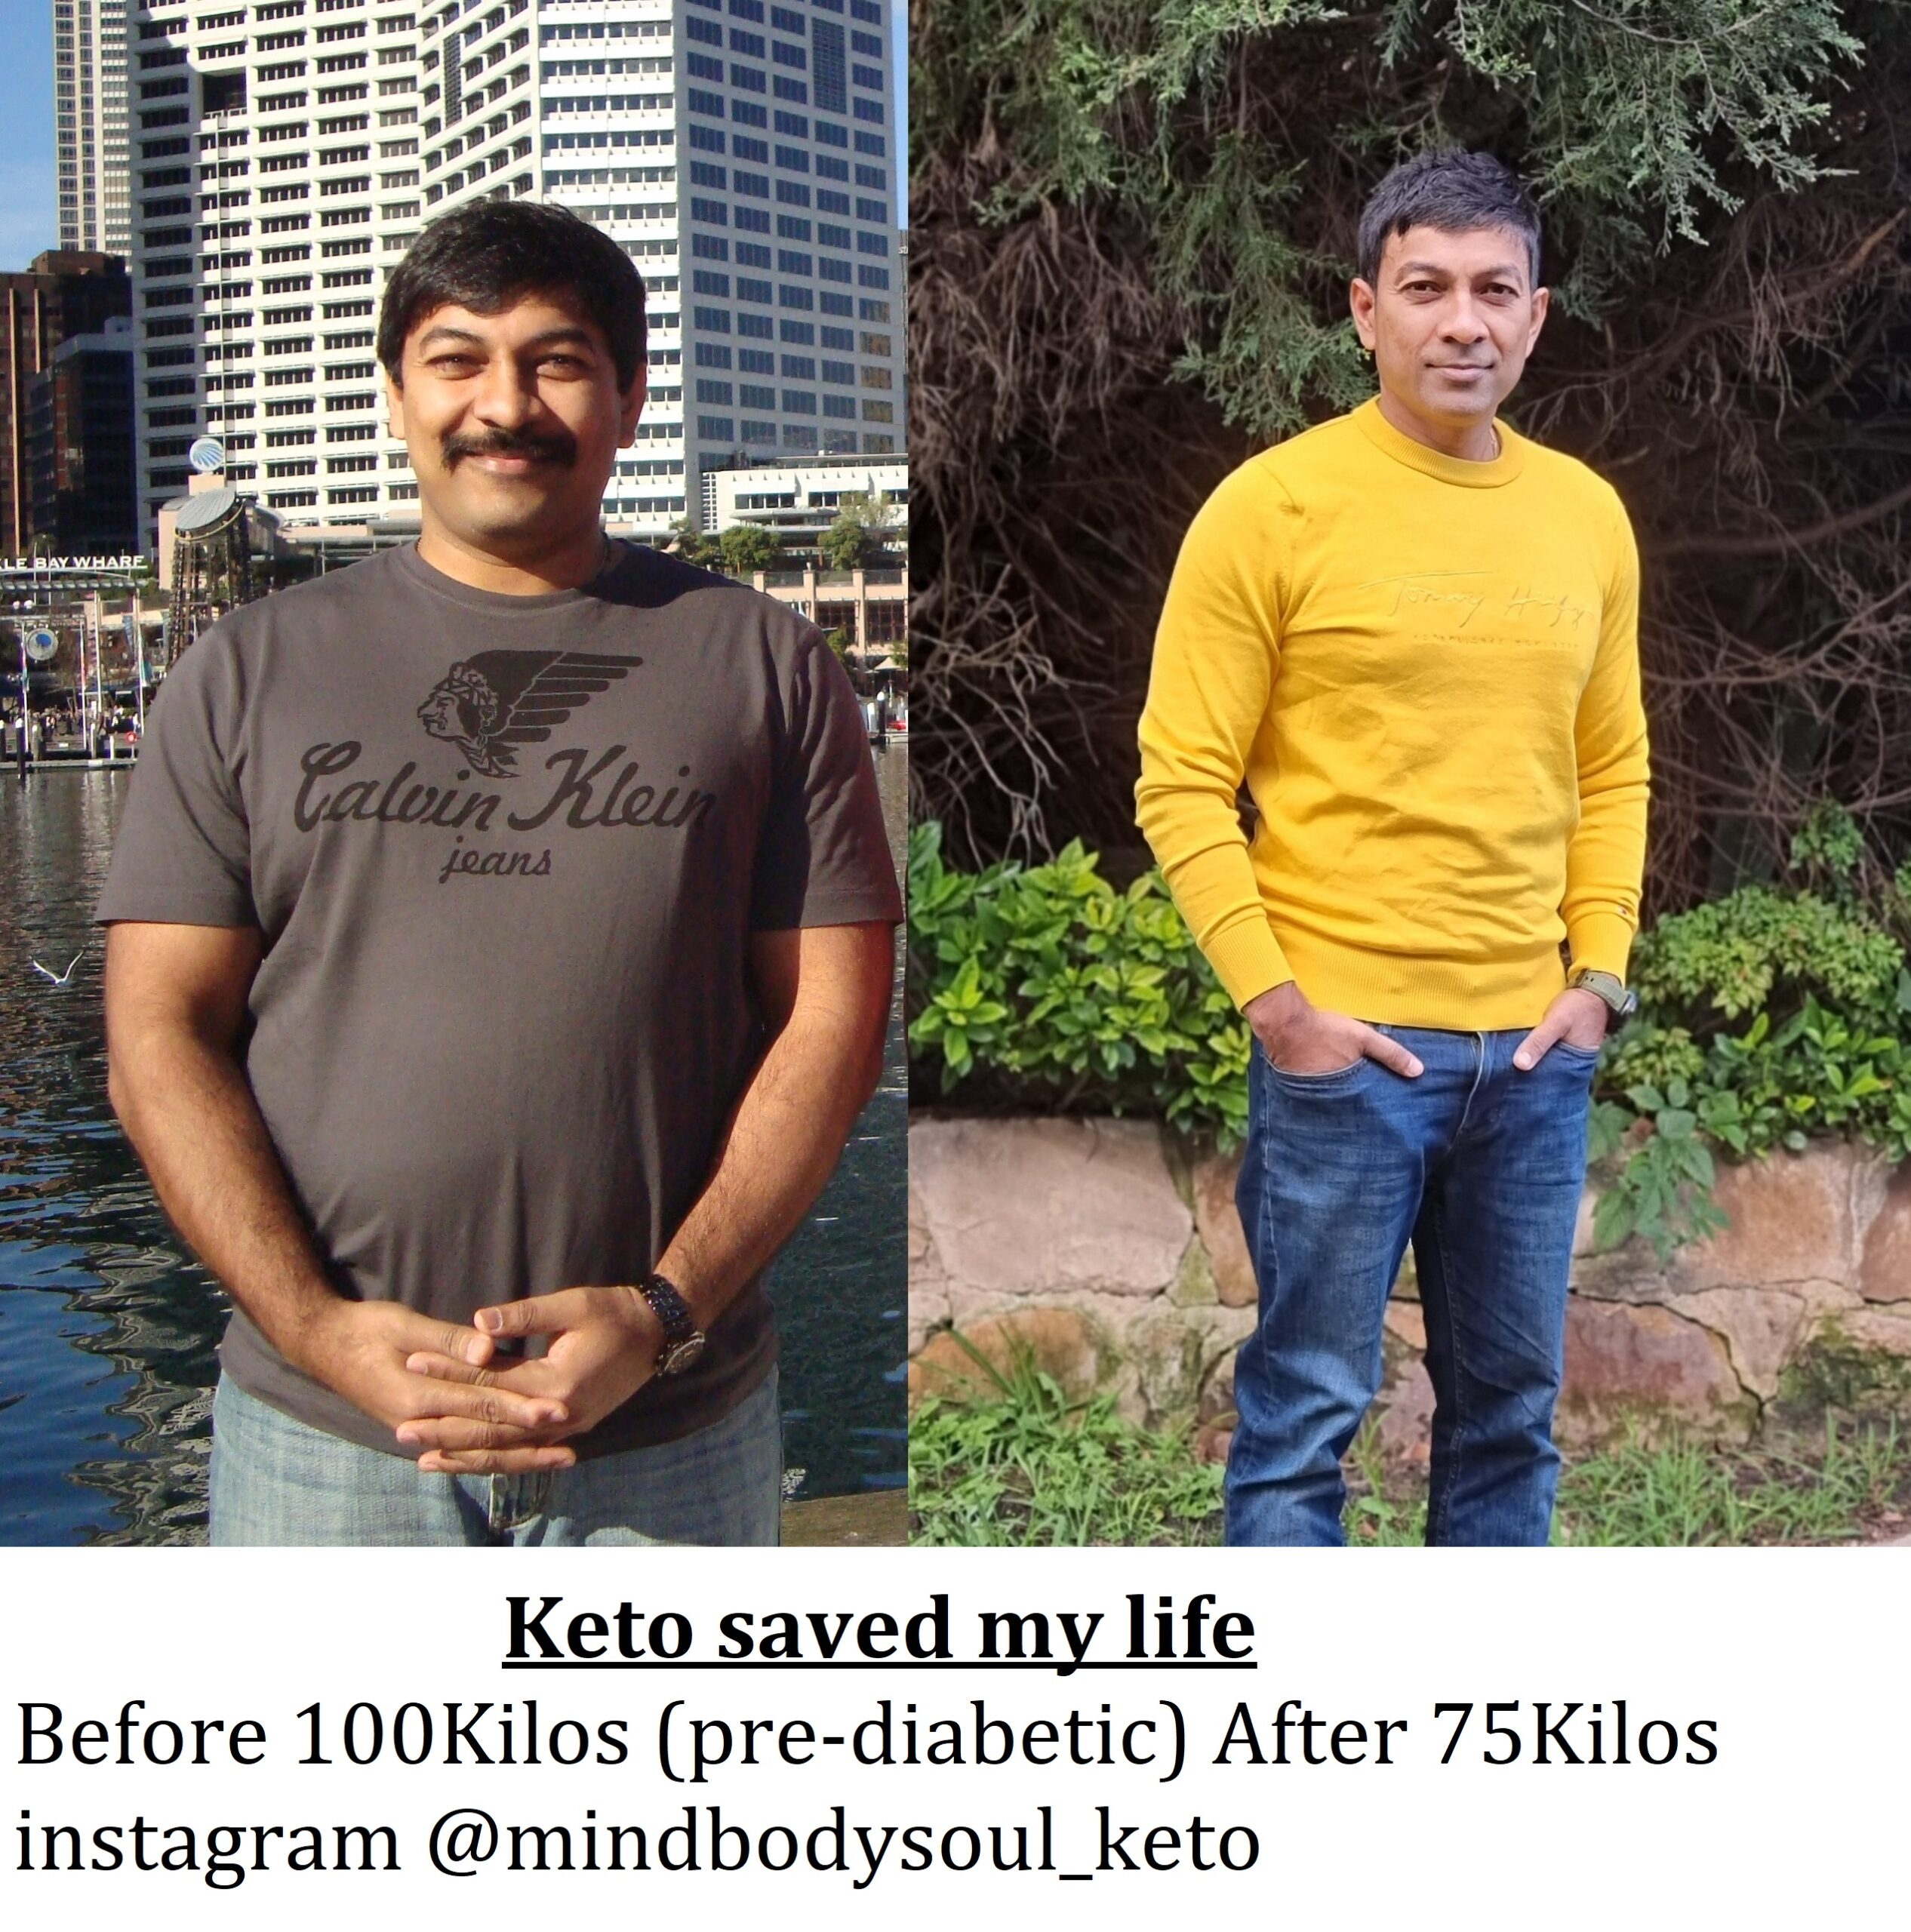 Keto diet saved my life